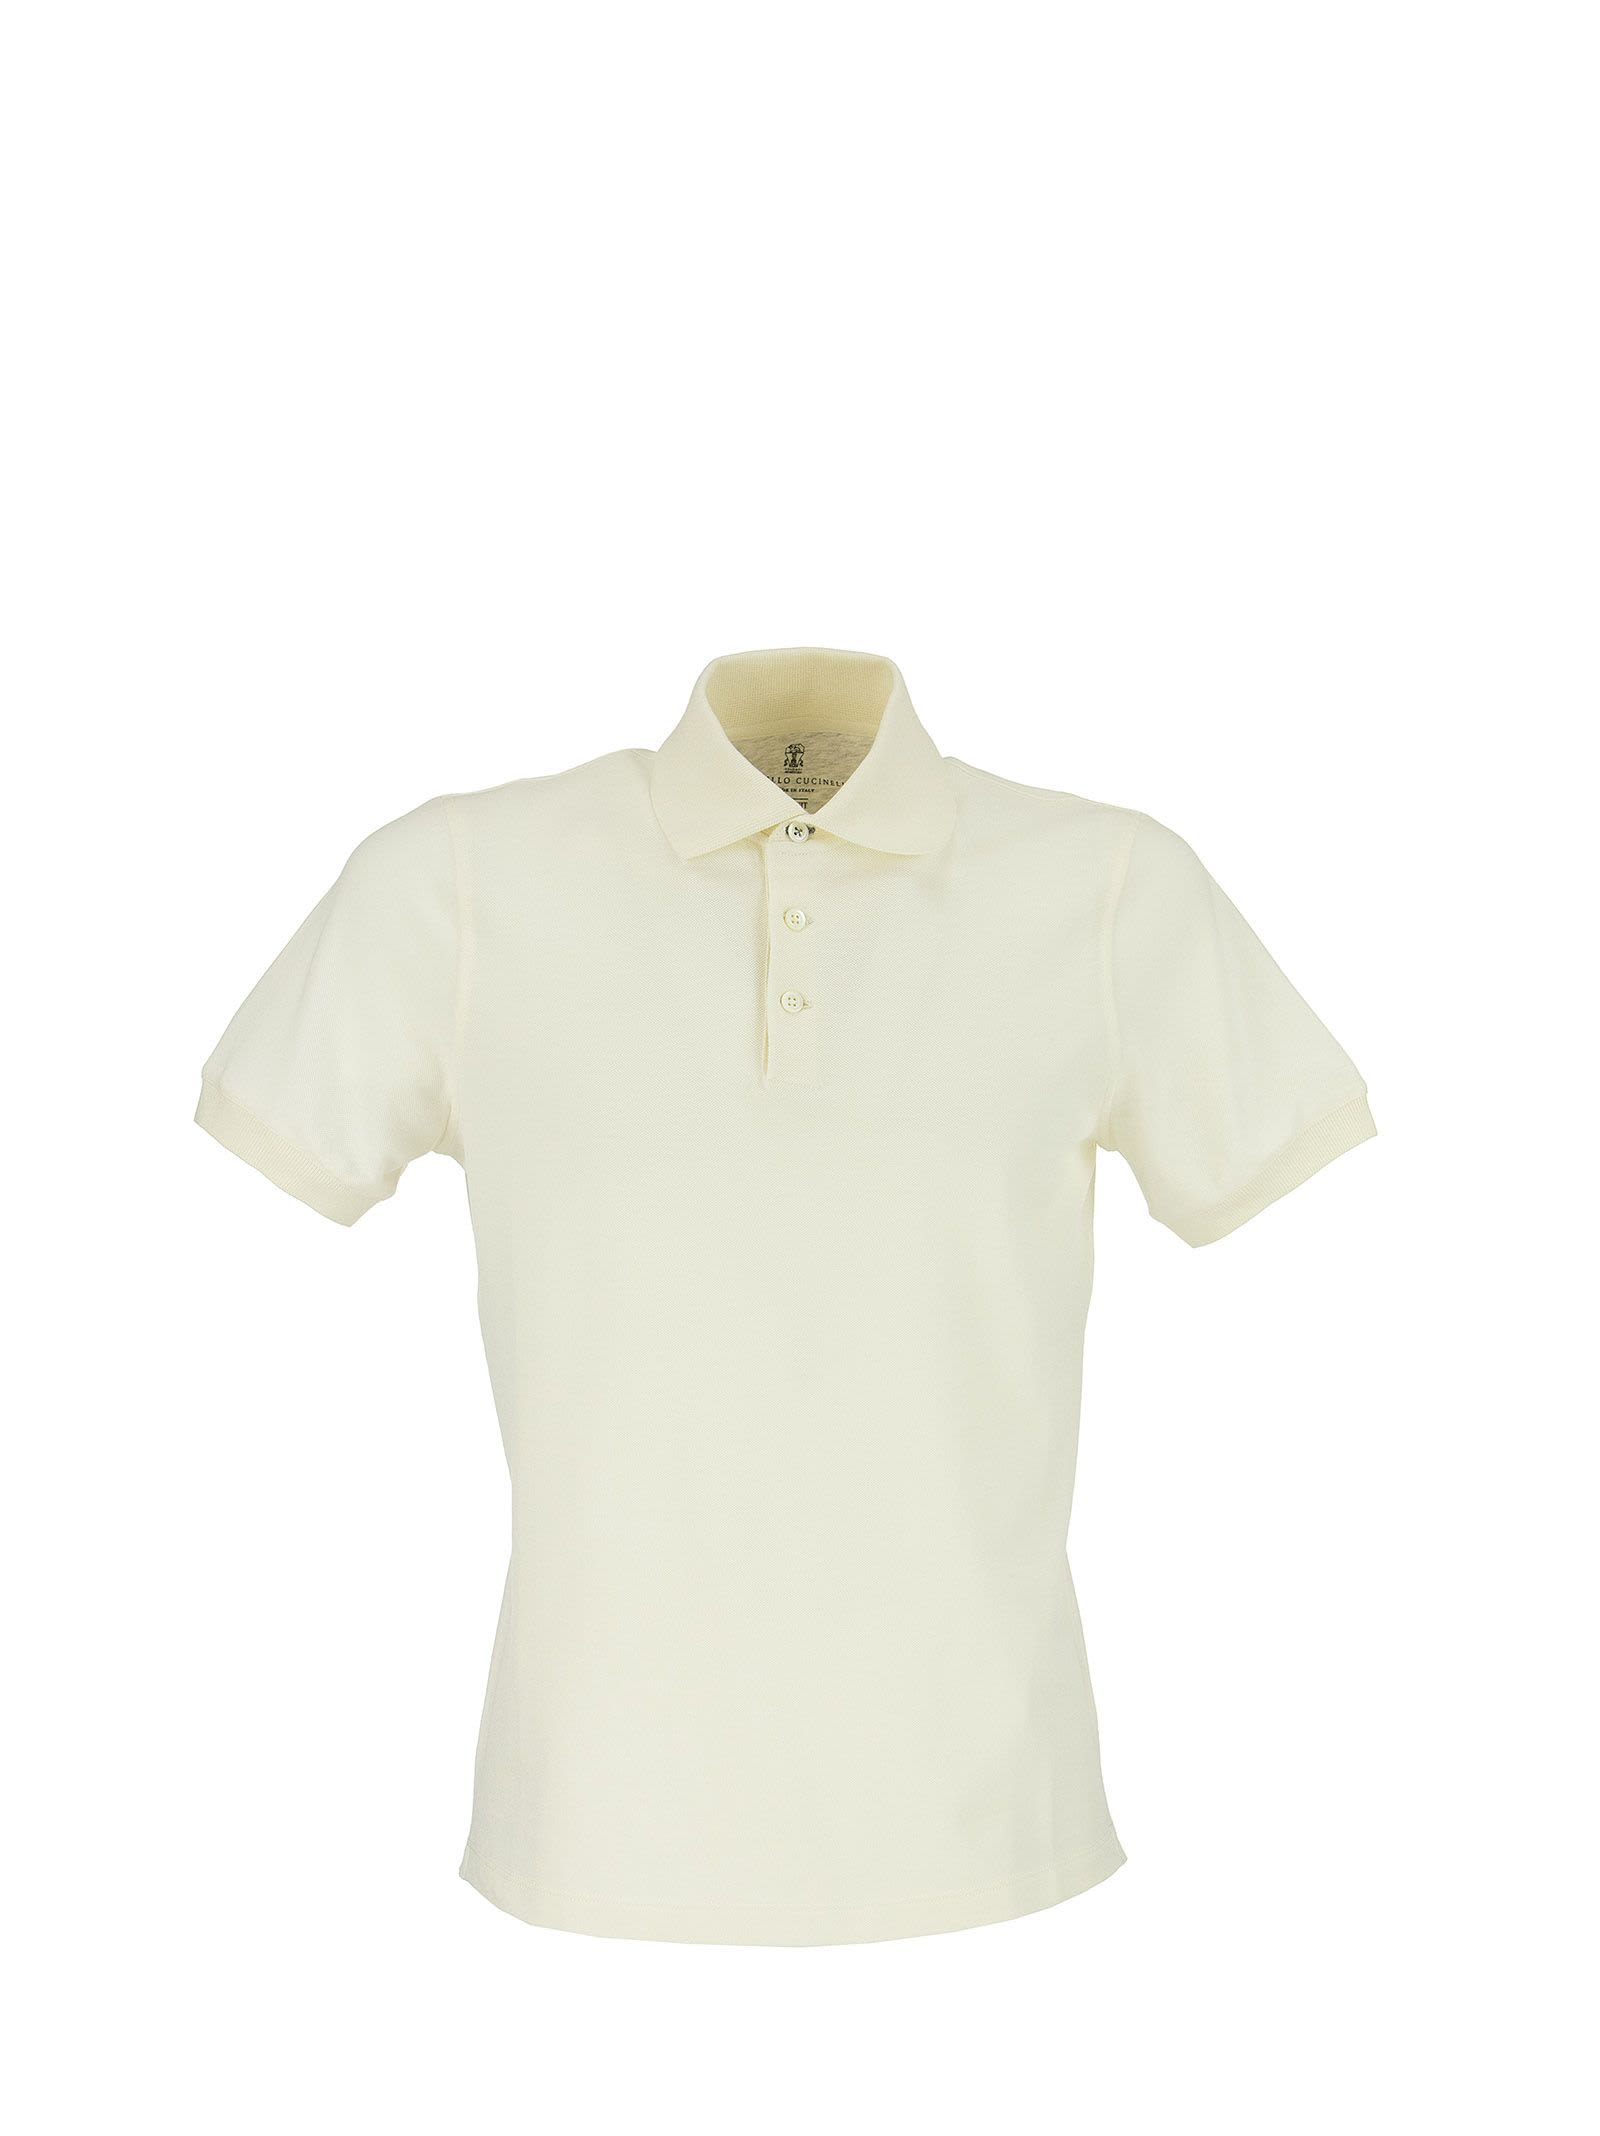 Brunello Cucinelli Cotton Piqué Slim Fit Polo Shirt With Knit Collar